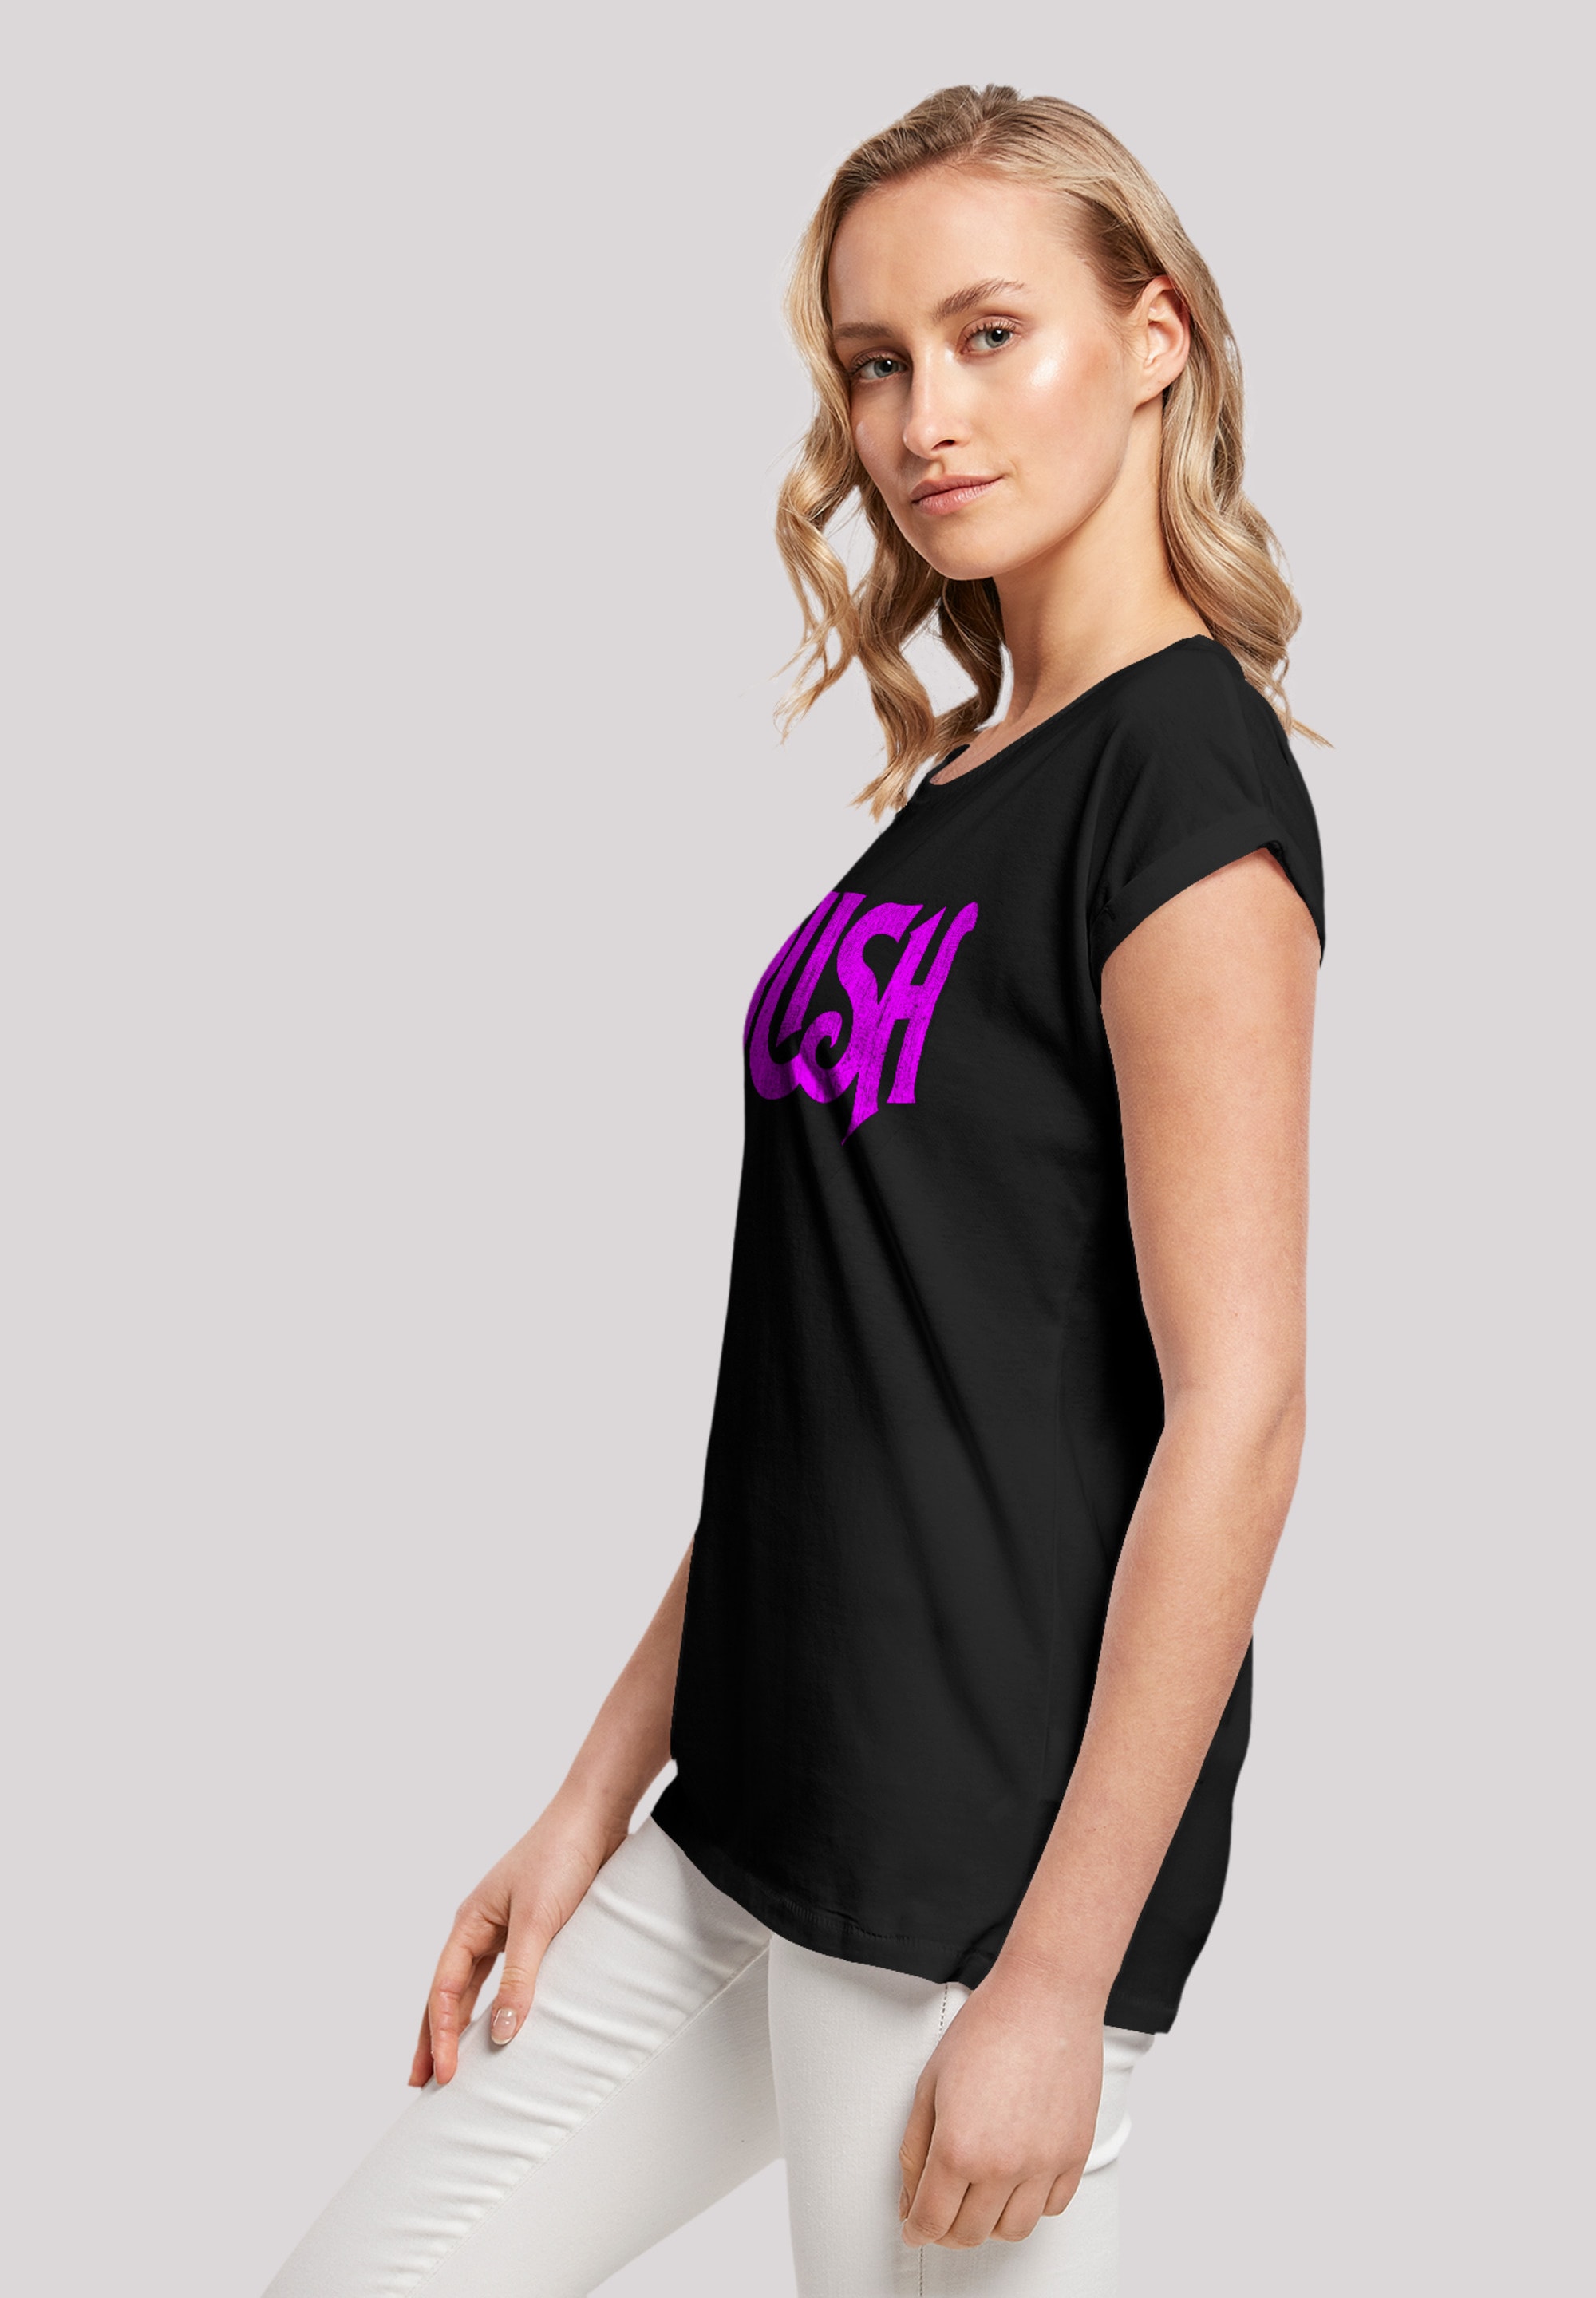 Distressed Qualität Rock walking »Rush F4NT4STIC Logo«, T-Shirt Premium Band I\'m |